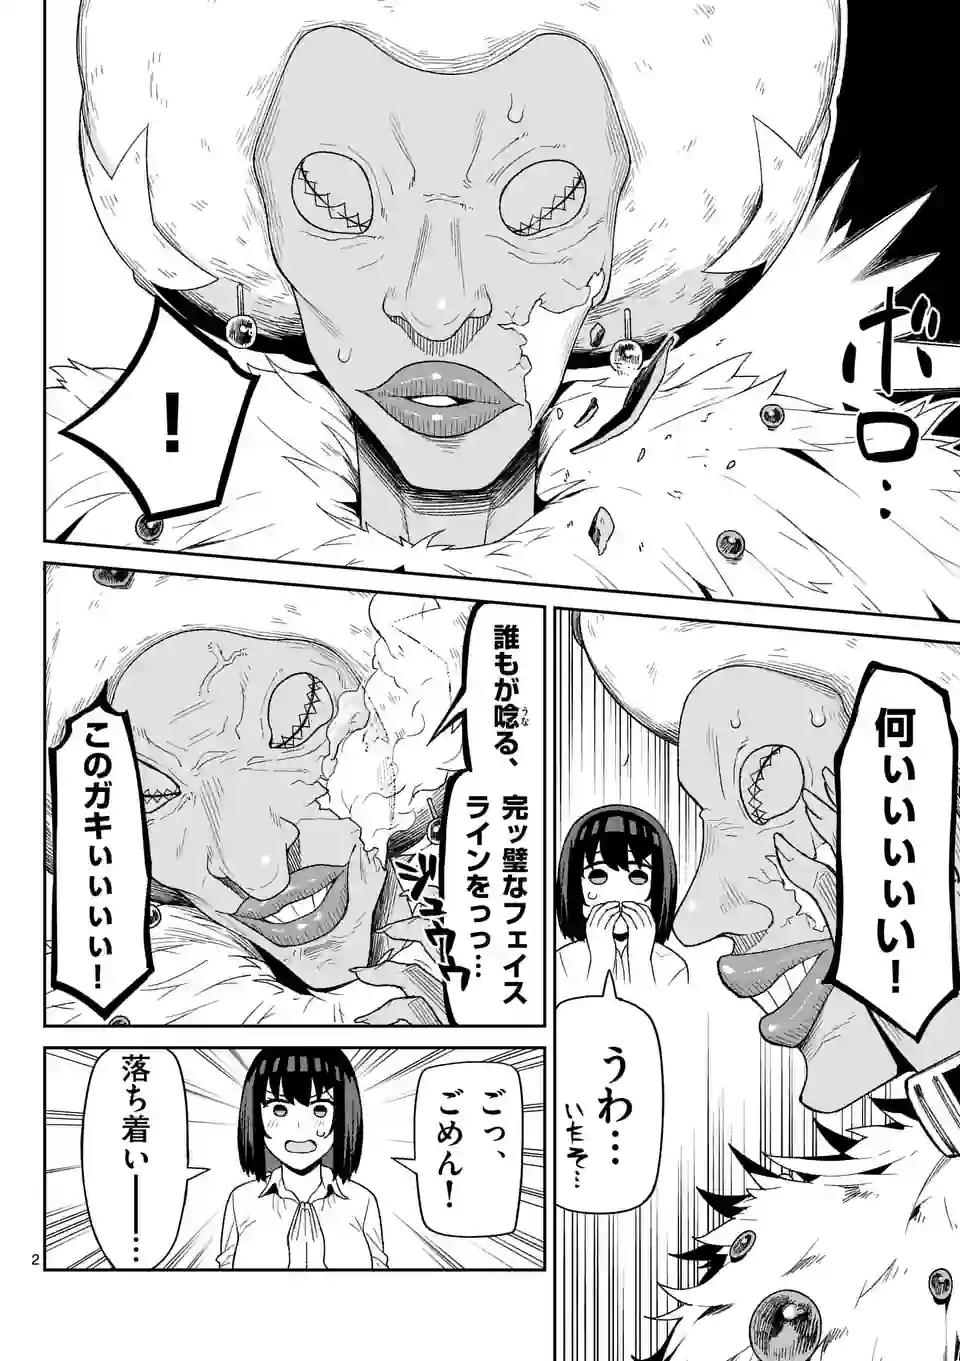 Bakemono Goroshi no Psycholily - Chapter 7 - Page 2